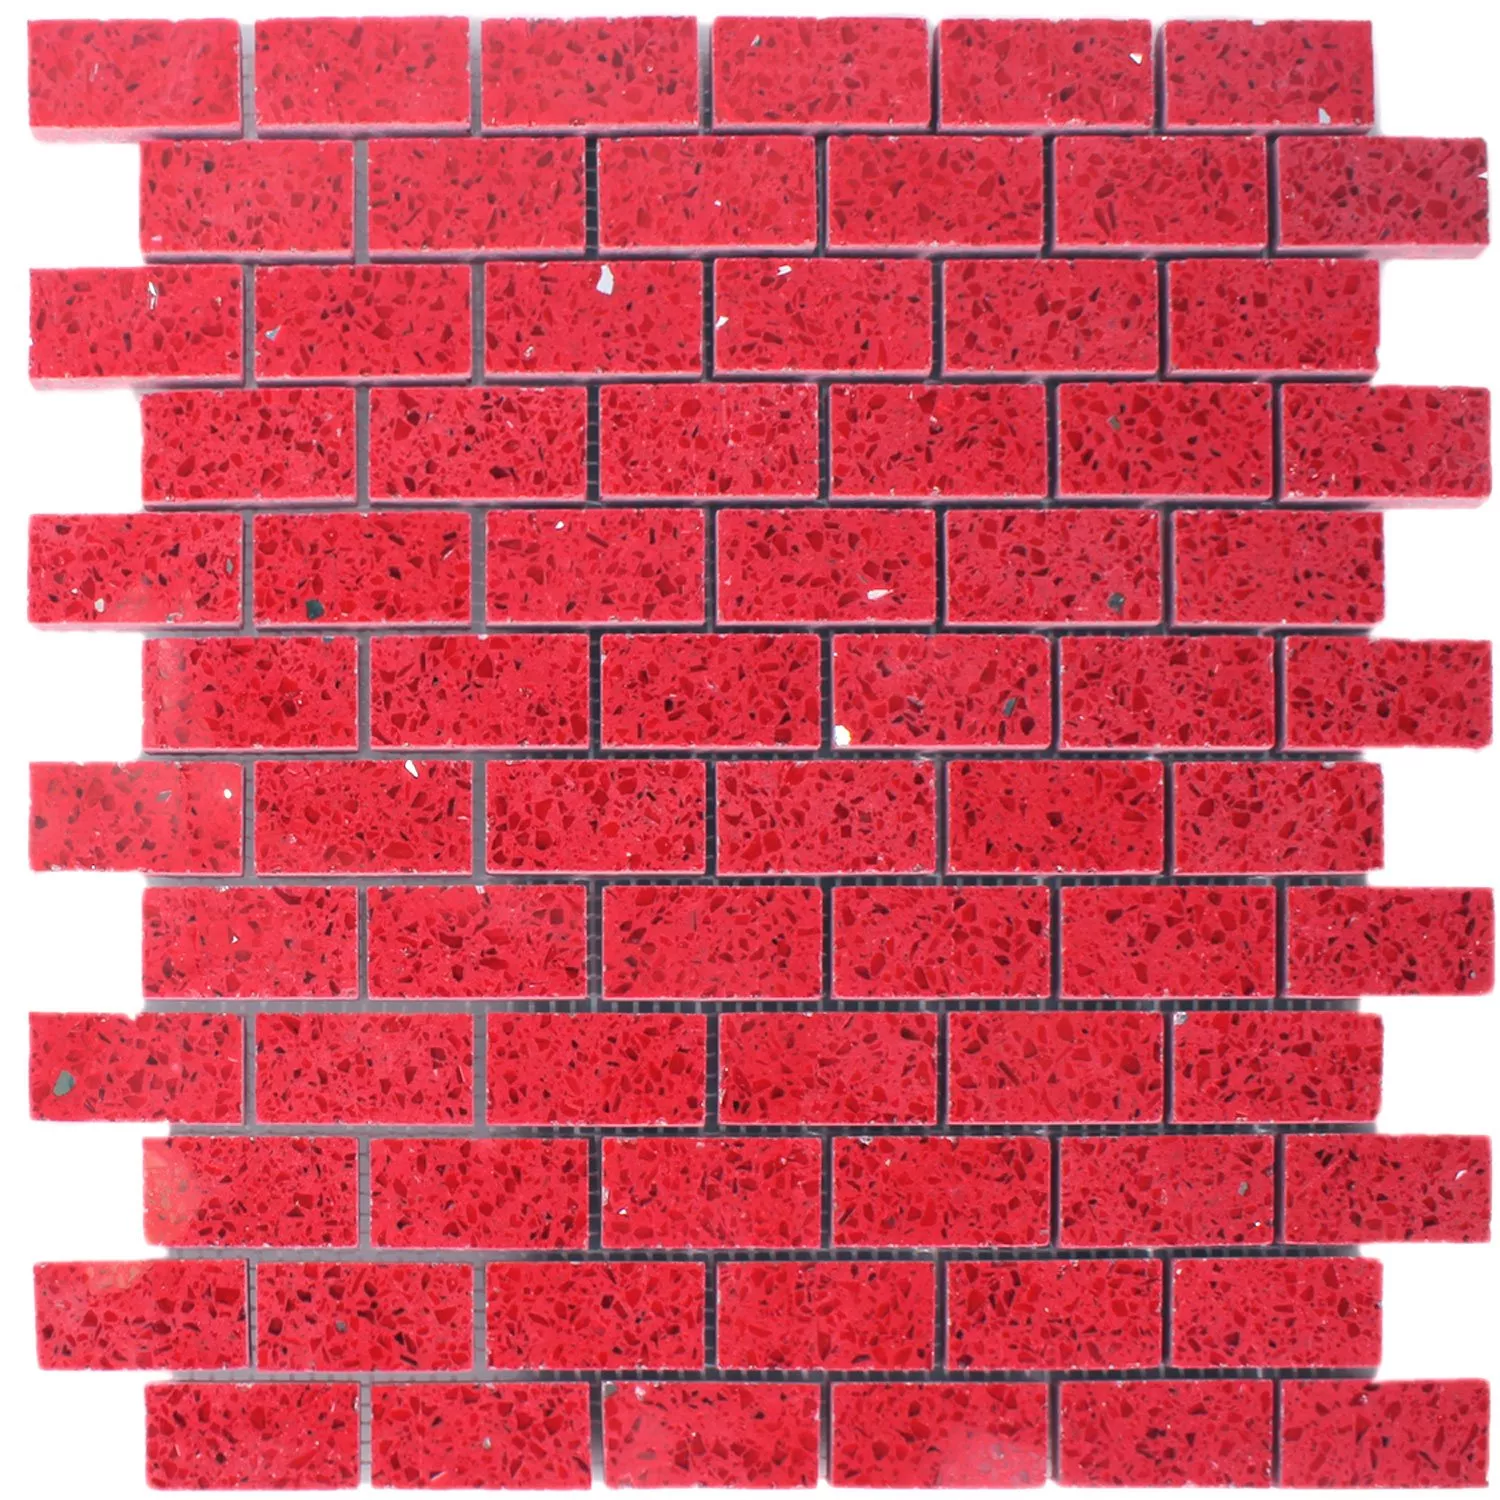 Sample Mosaic Tiles Resin Quartz Red